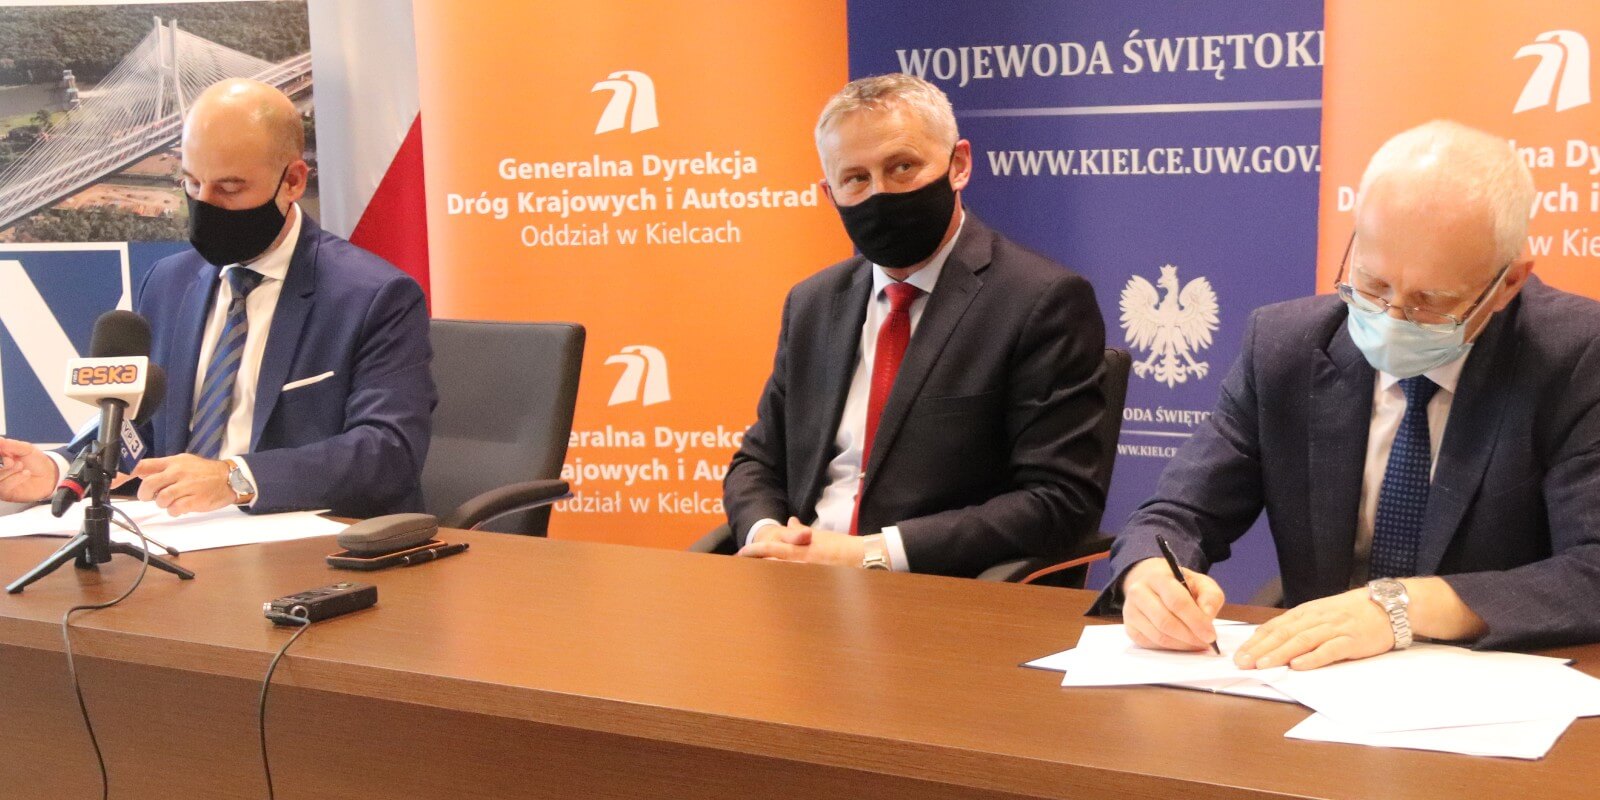 ACCIONA AWARDED WORKS IN POLAND WORTH €140 MILLION